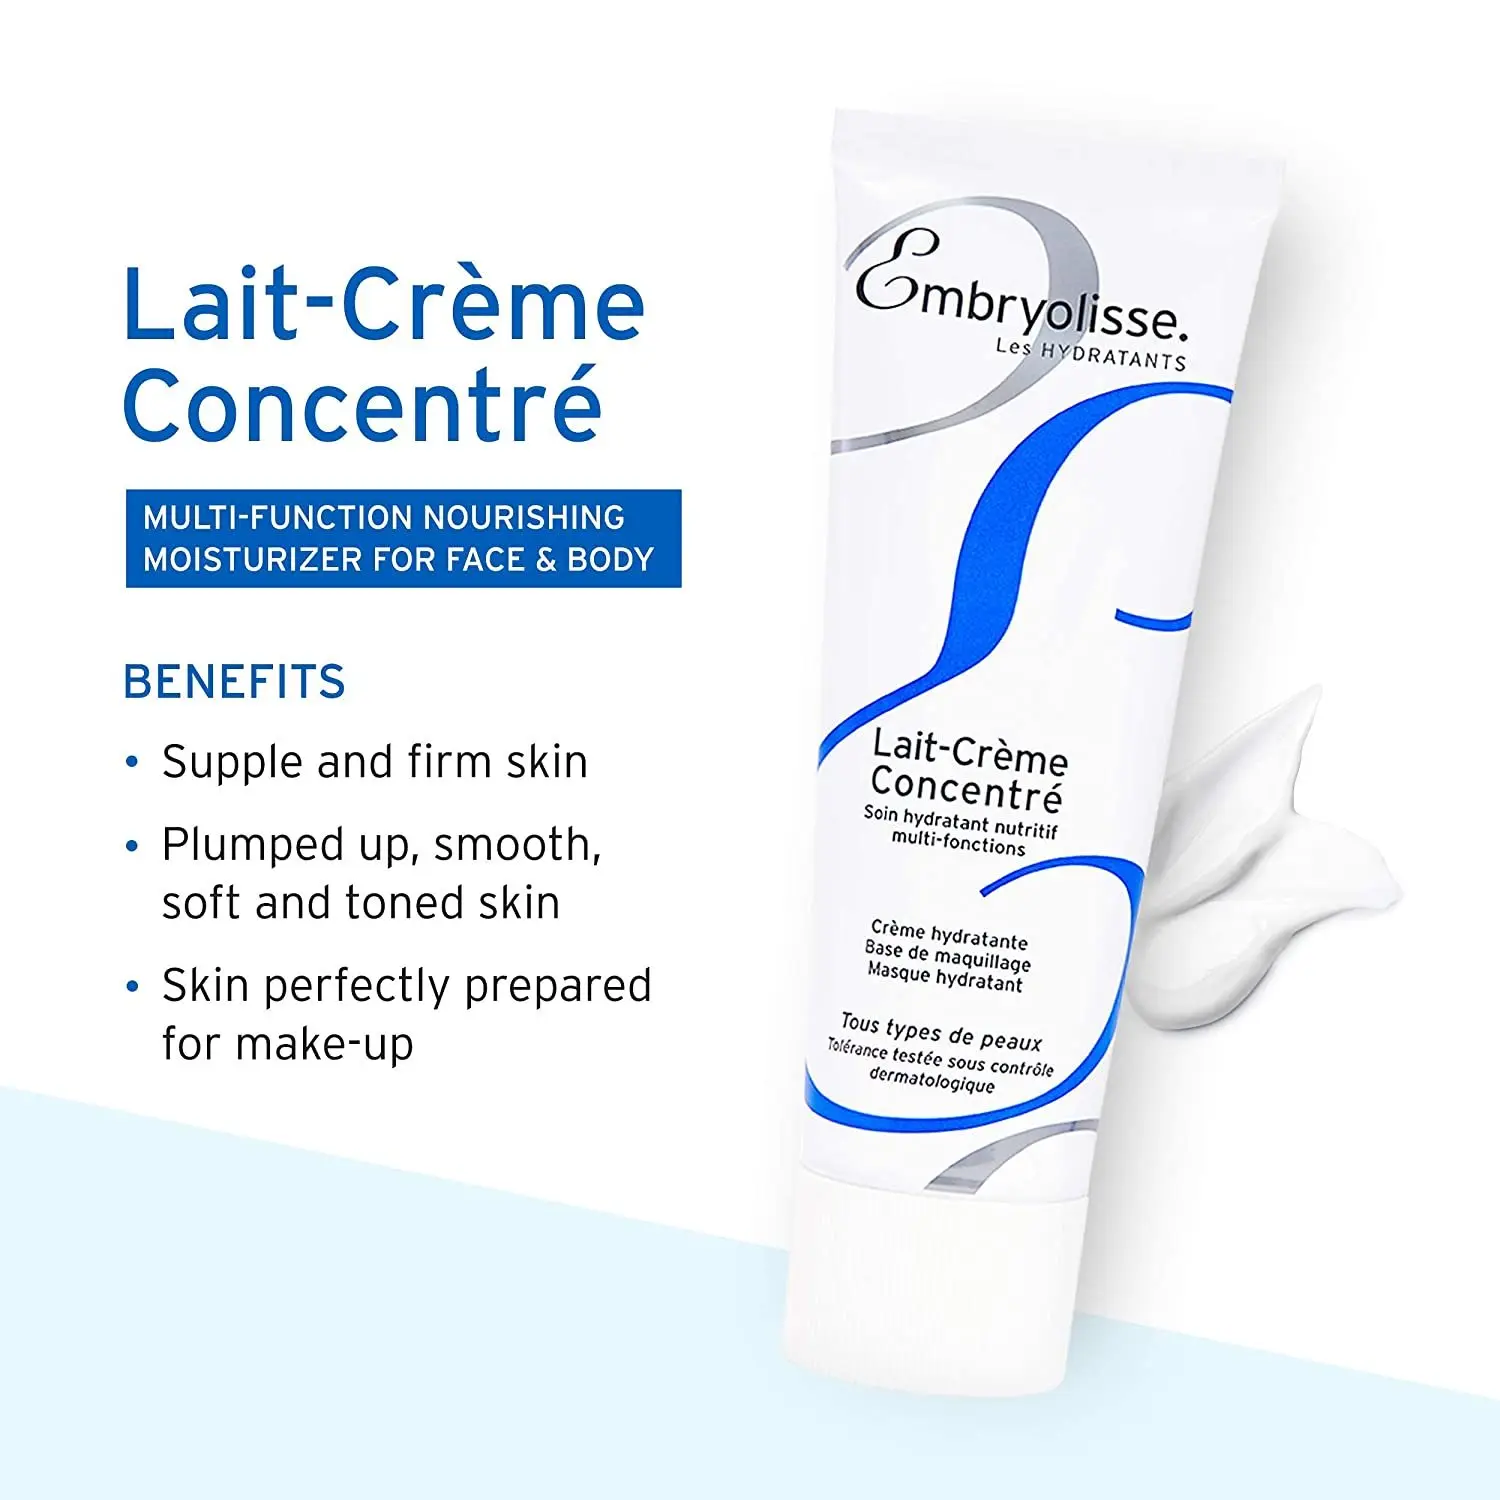 

Embryolisse Lait-Crème Concentré Face Moisturizing Cream Makeup Primer Shea Facial Moisturizer Soothing For Daily Skin Care 75ml